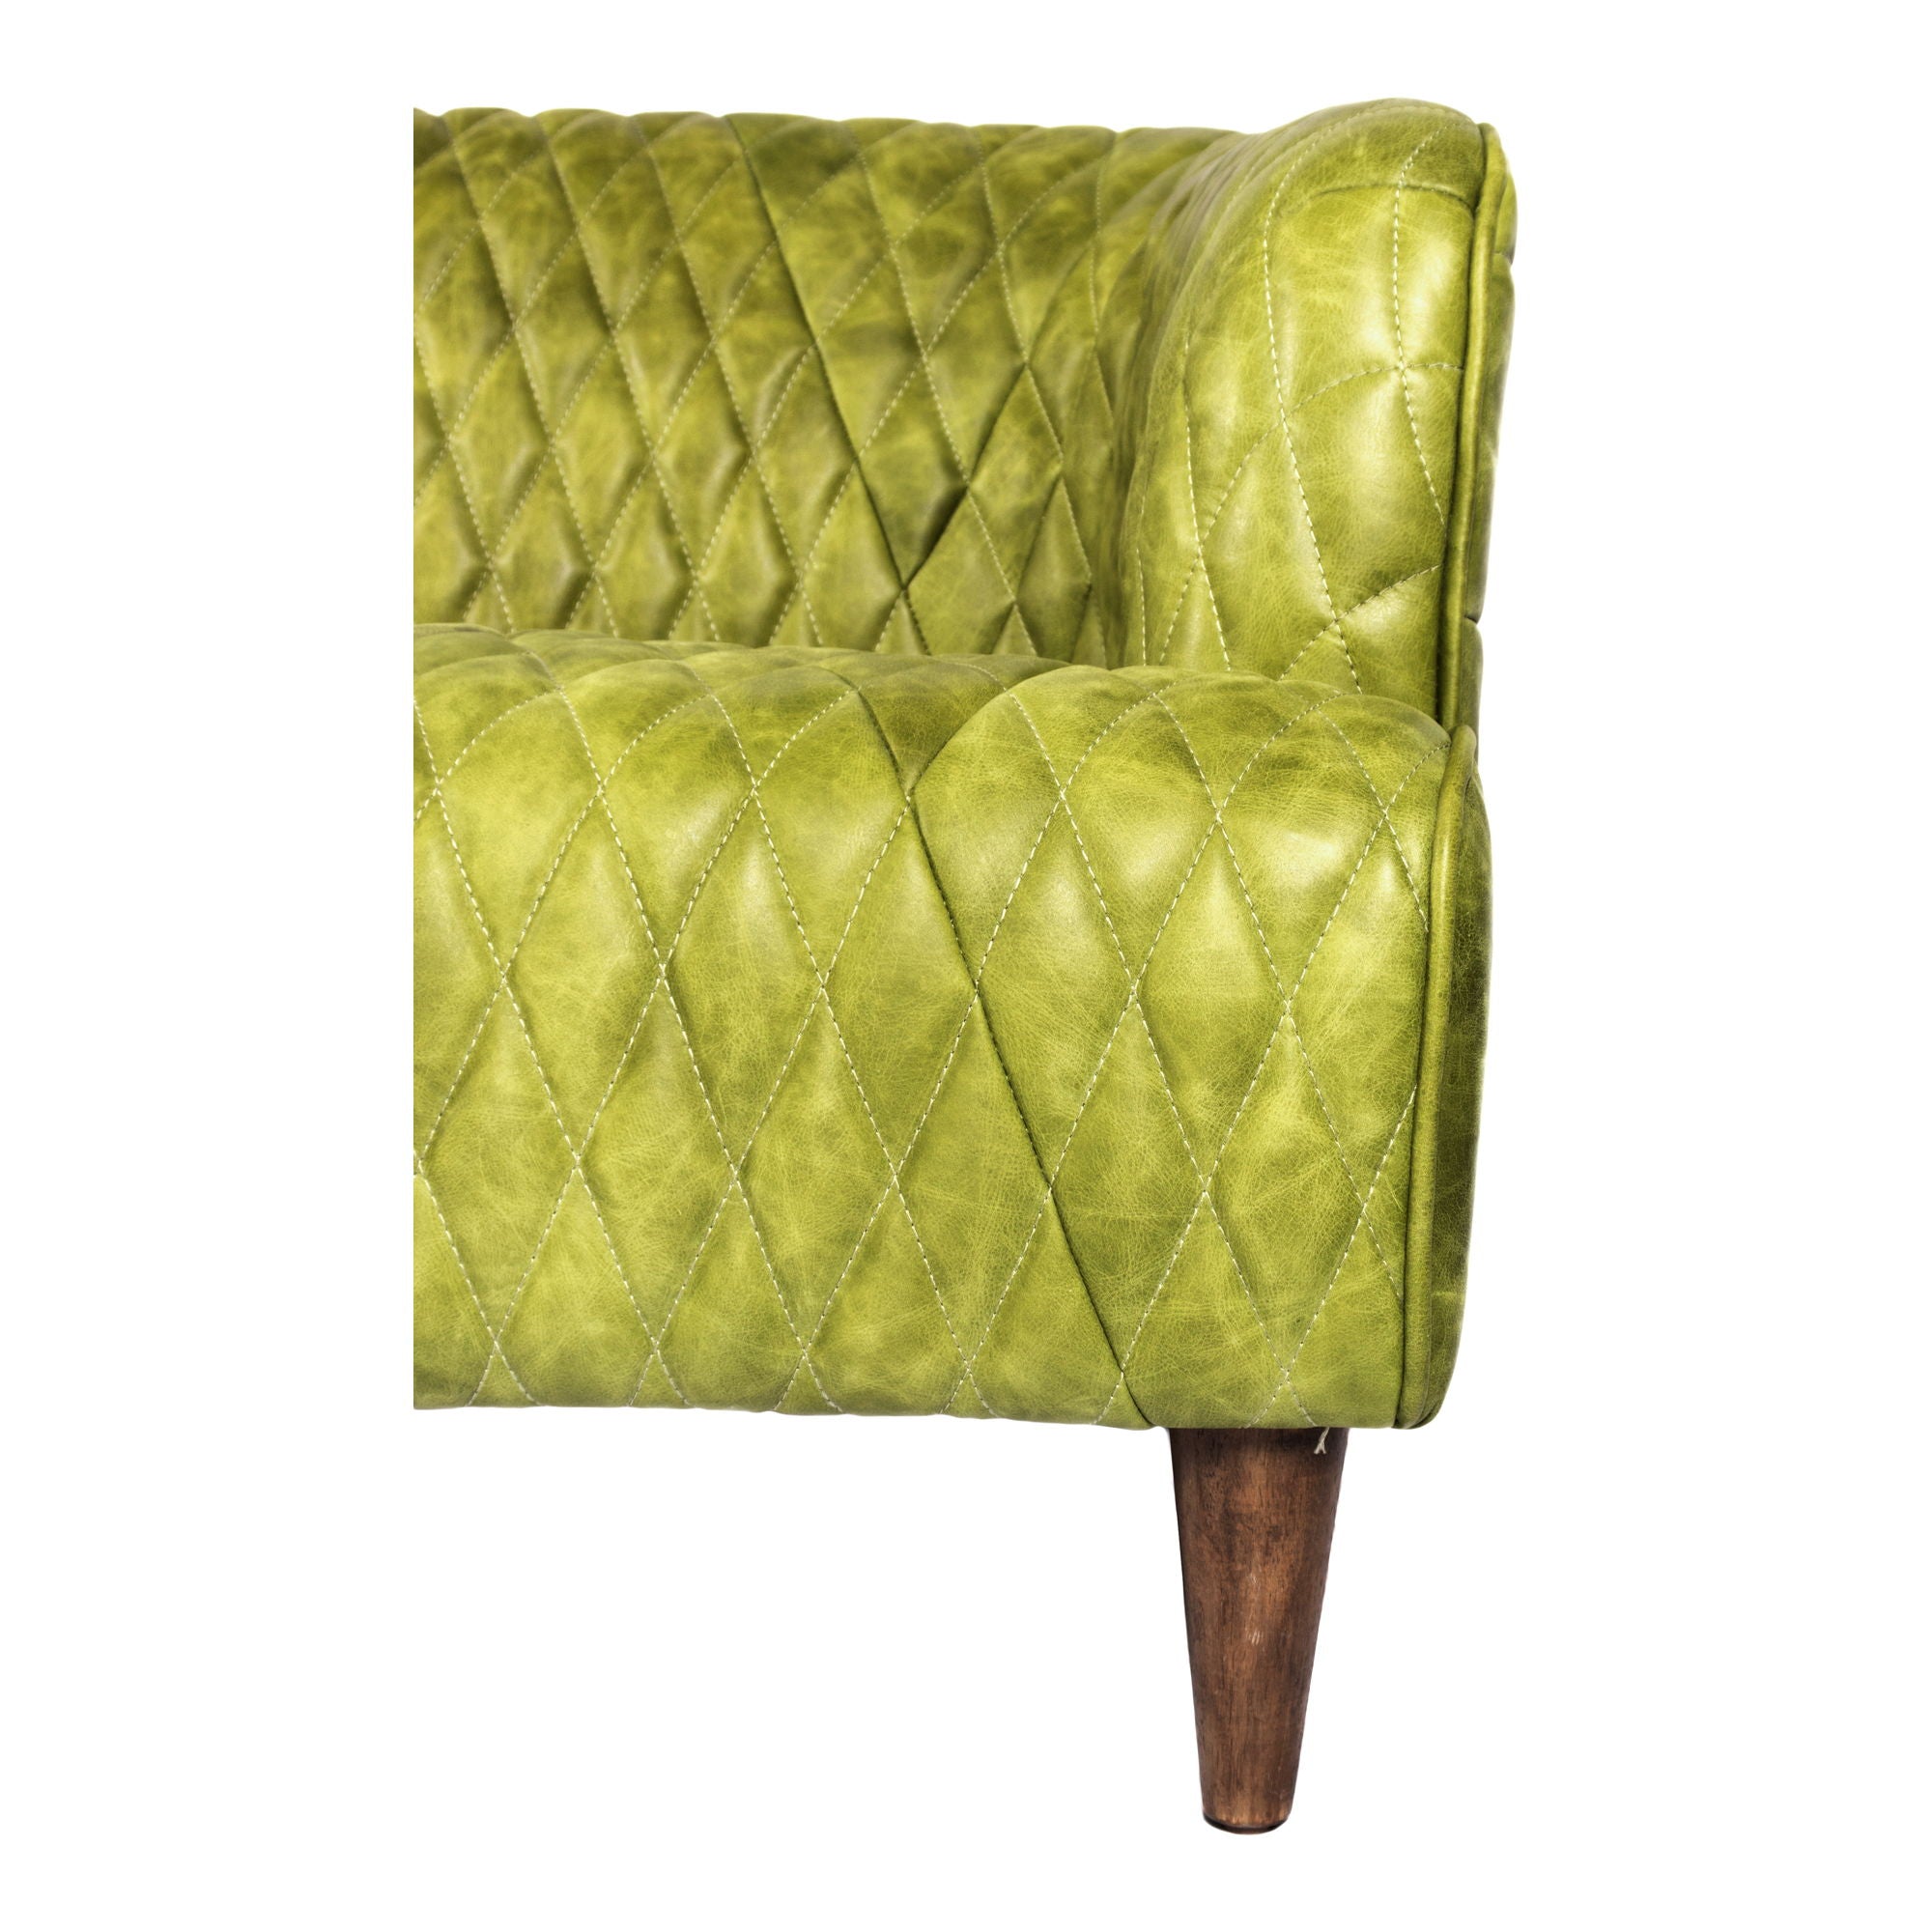 Magdelan - Tufted Leather Sofa - Emerald